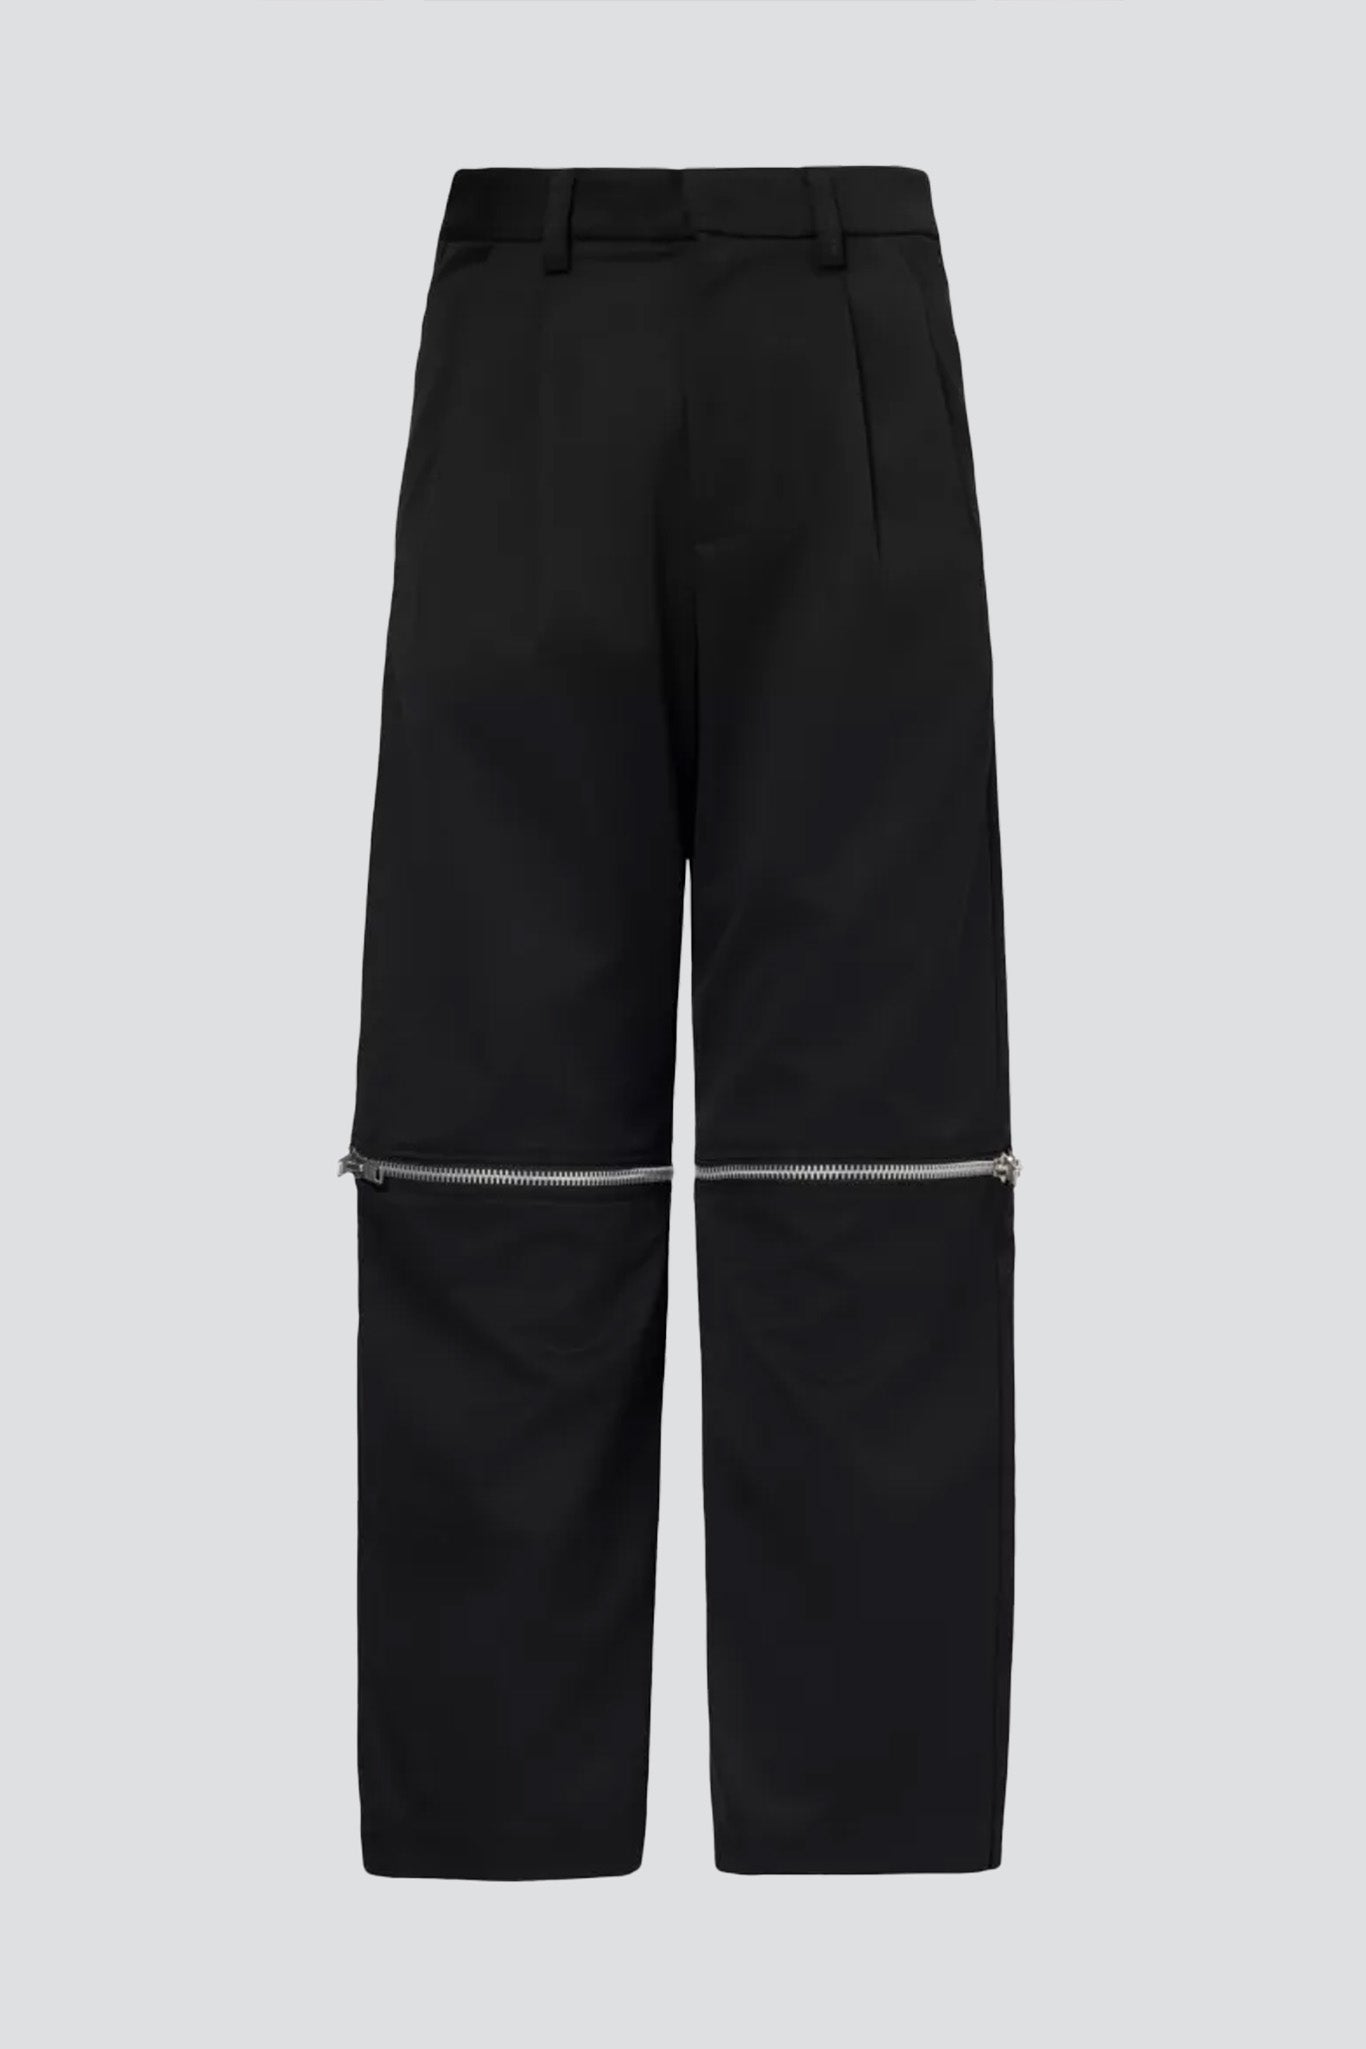 Black Zipper Trousers